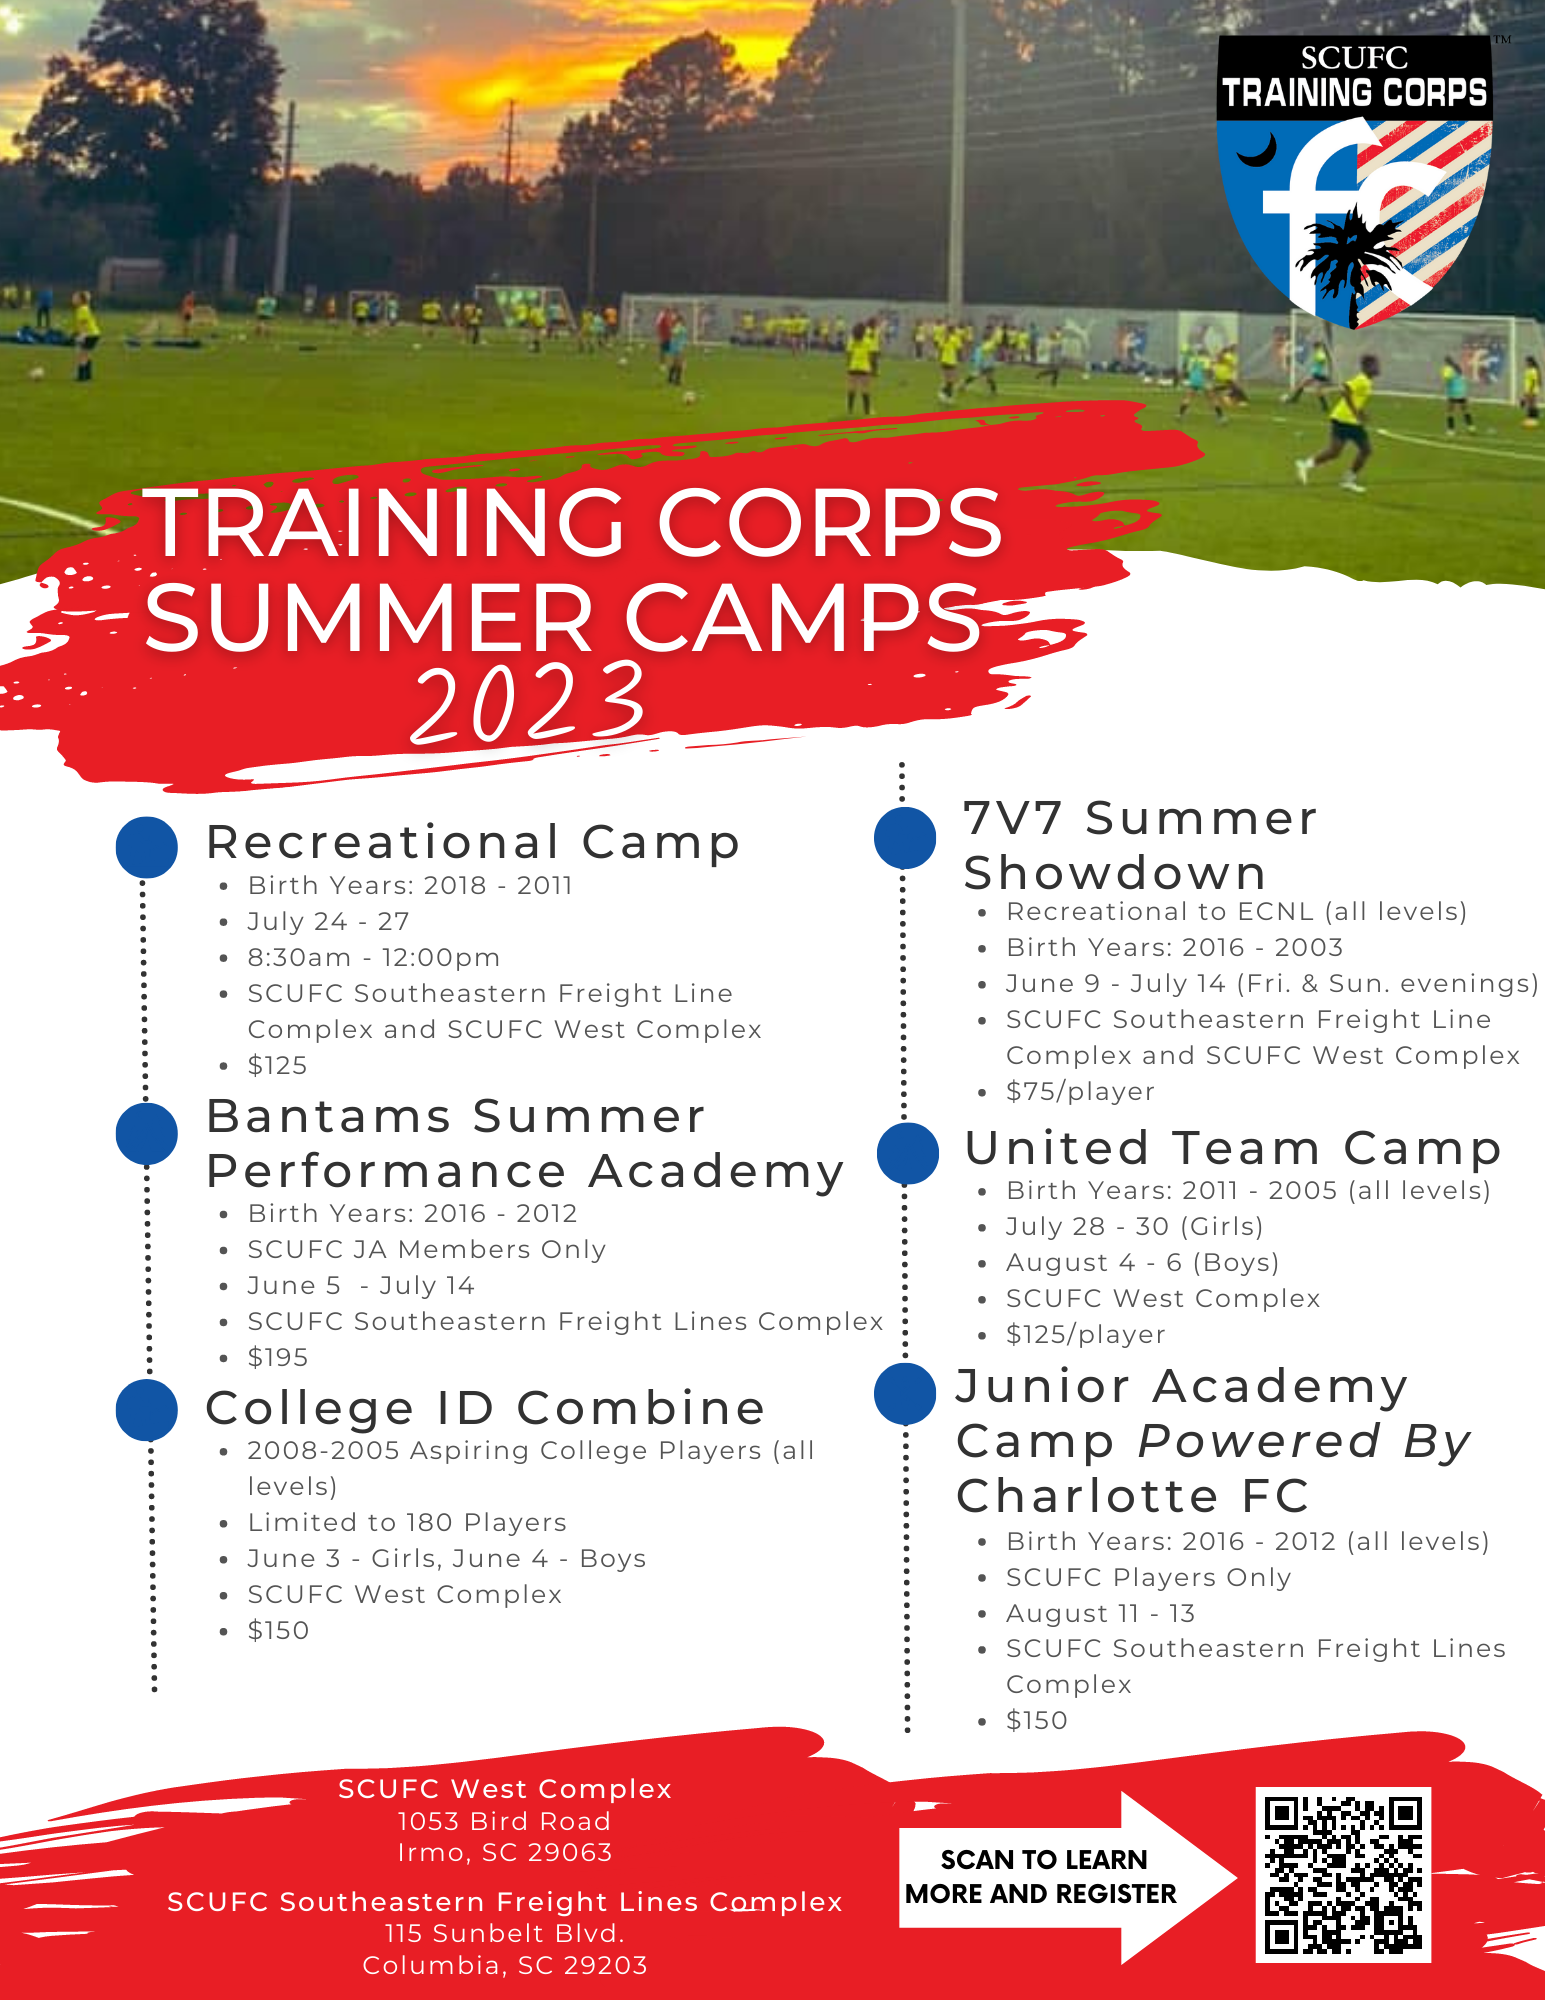 Register Now for Summer Soccer Camps